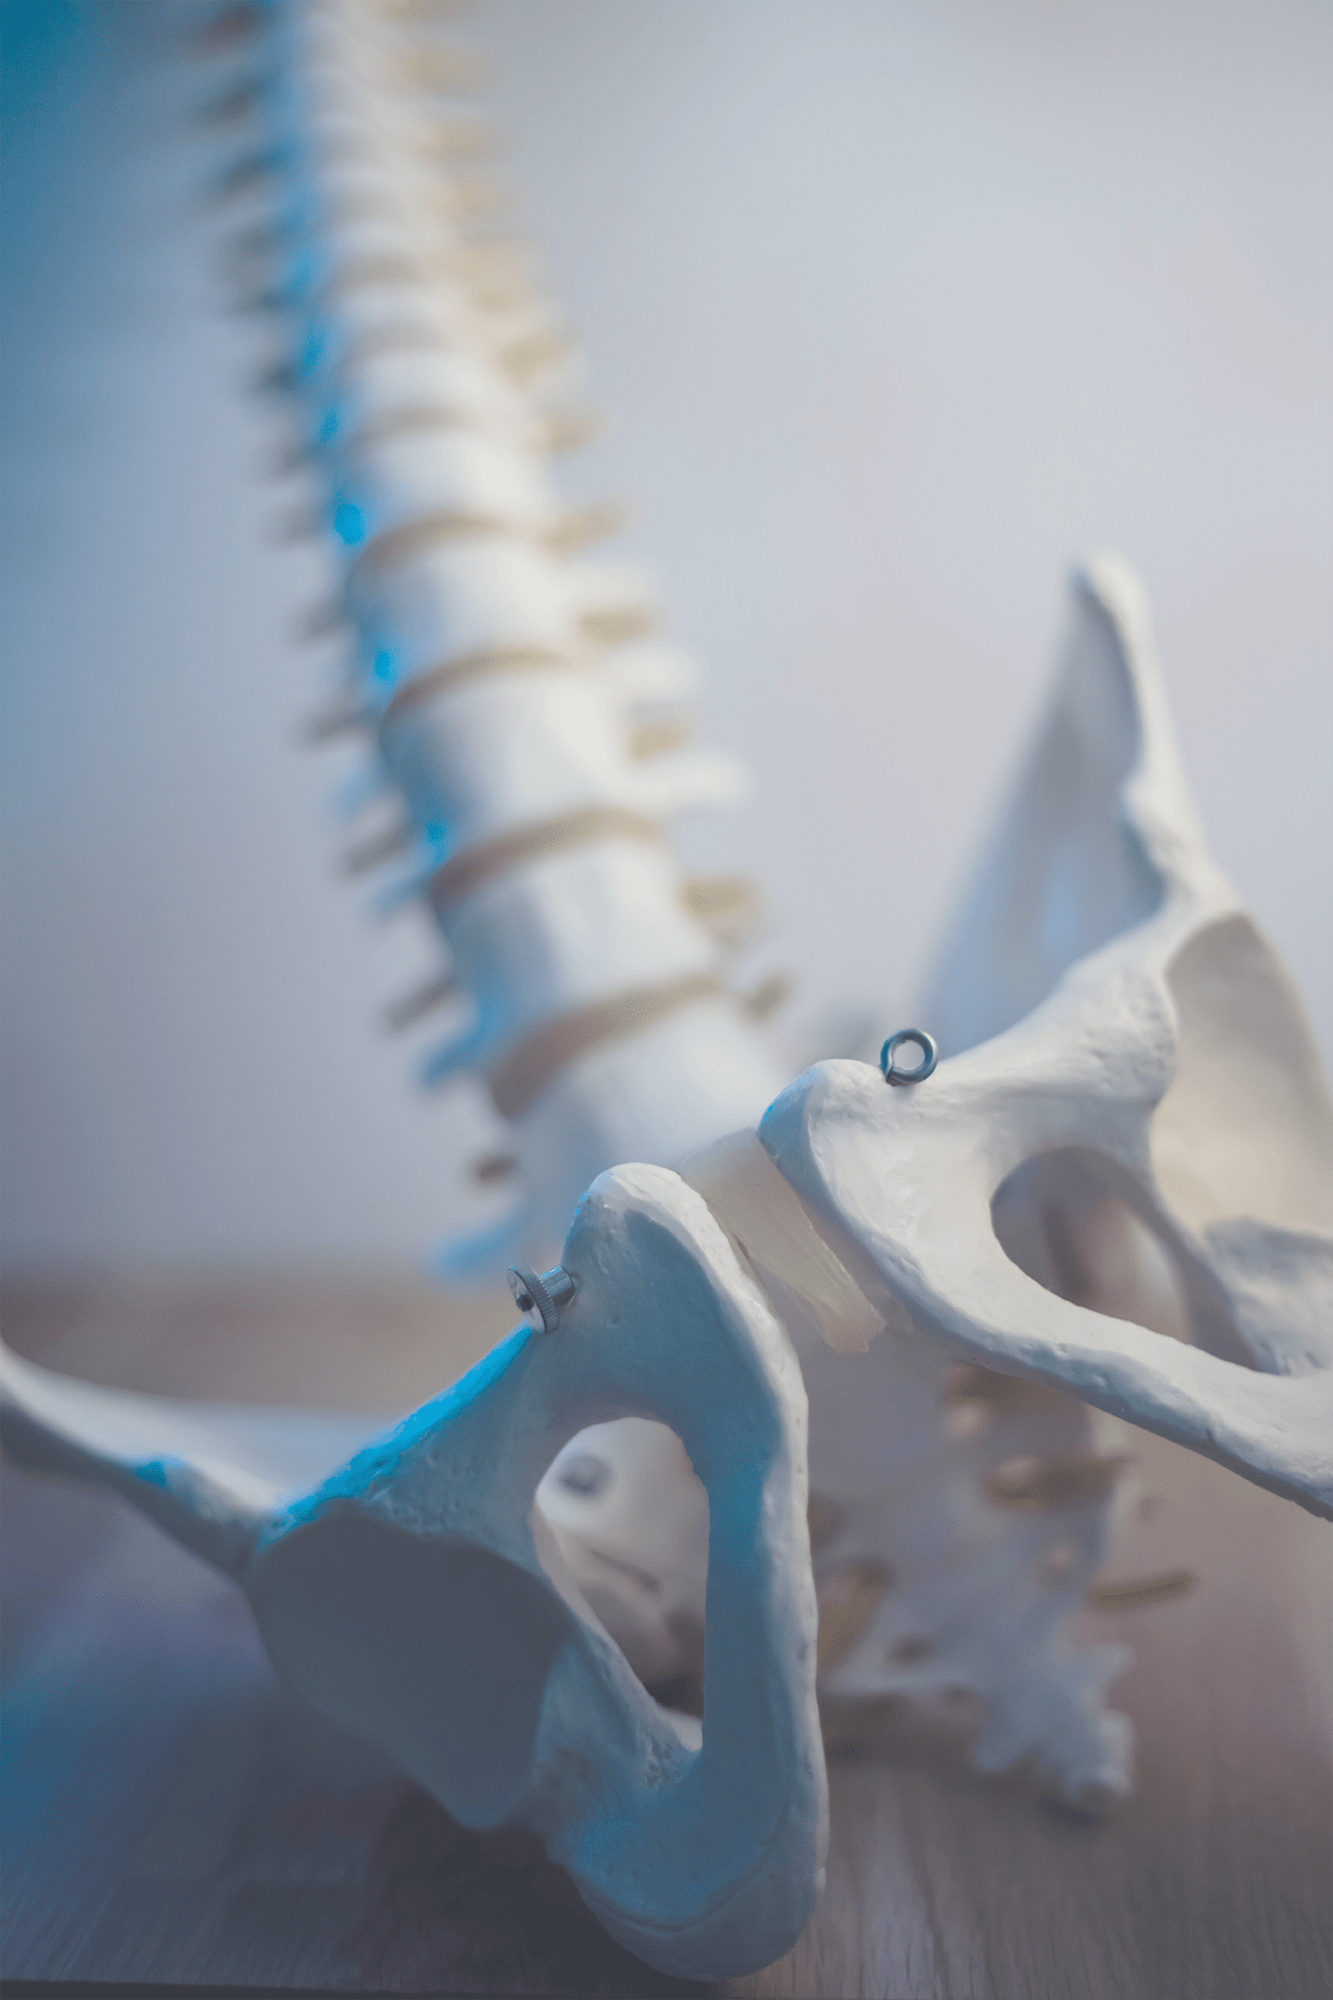 Spine and pelvis bones